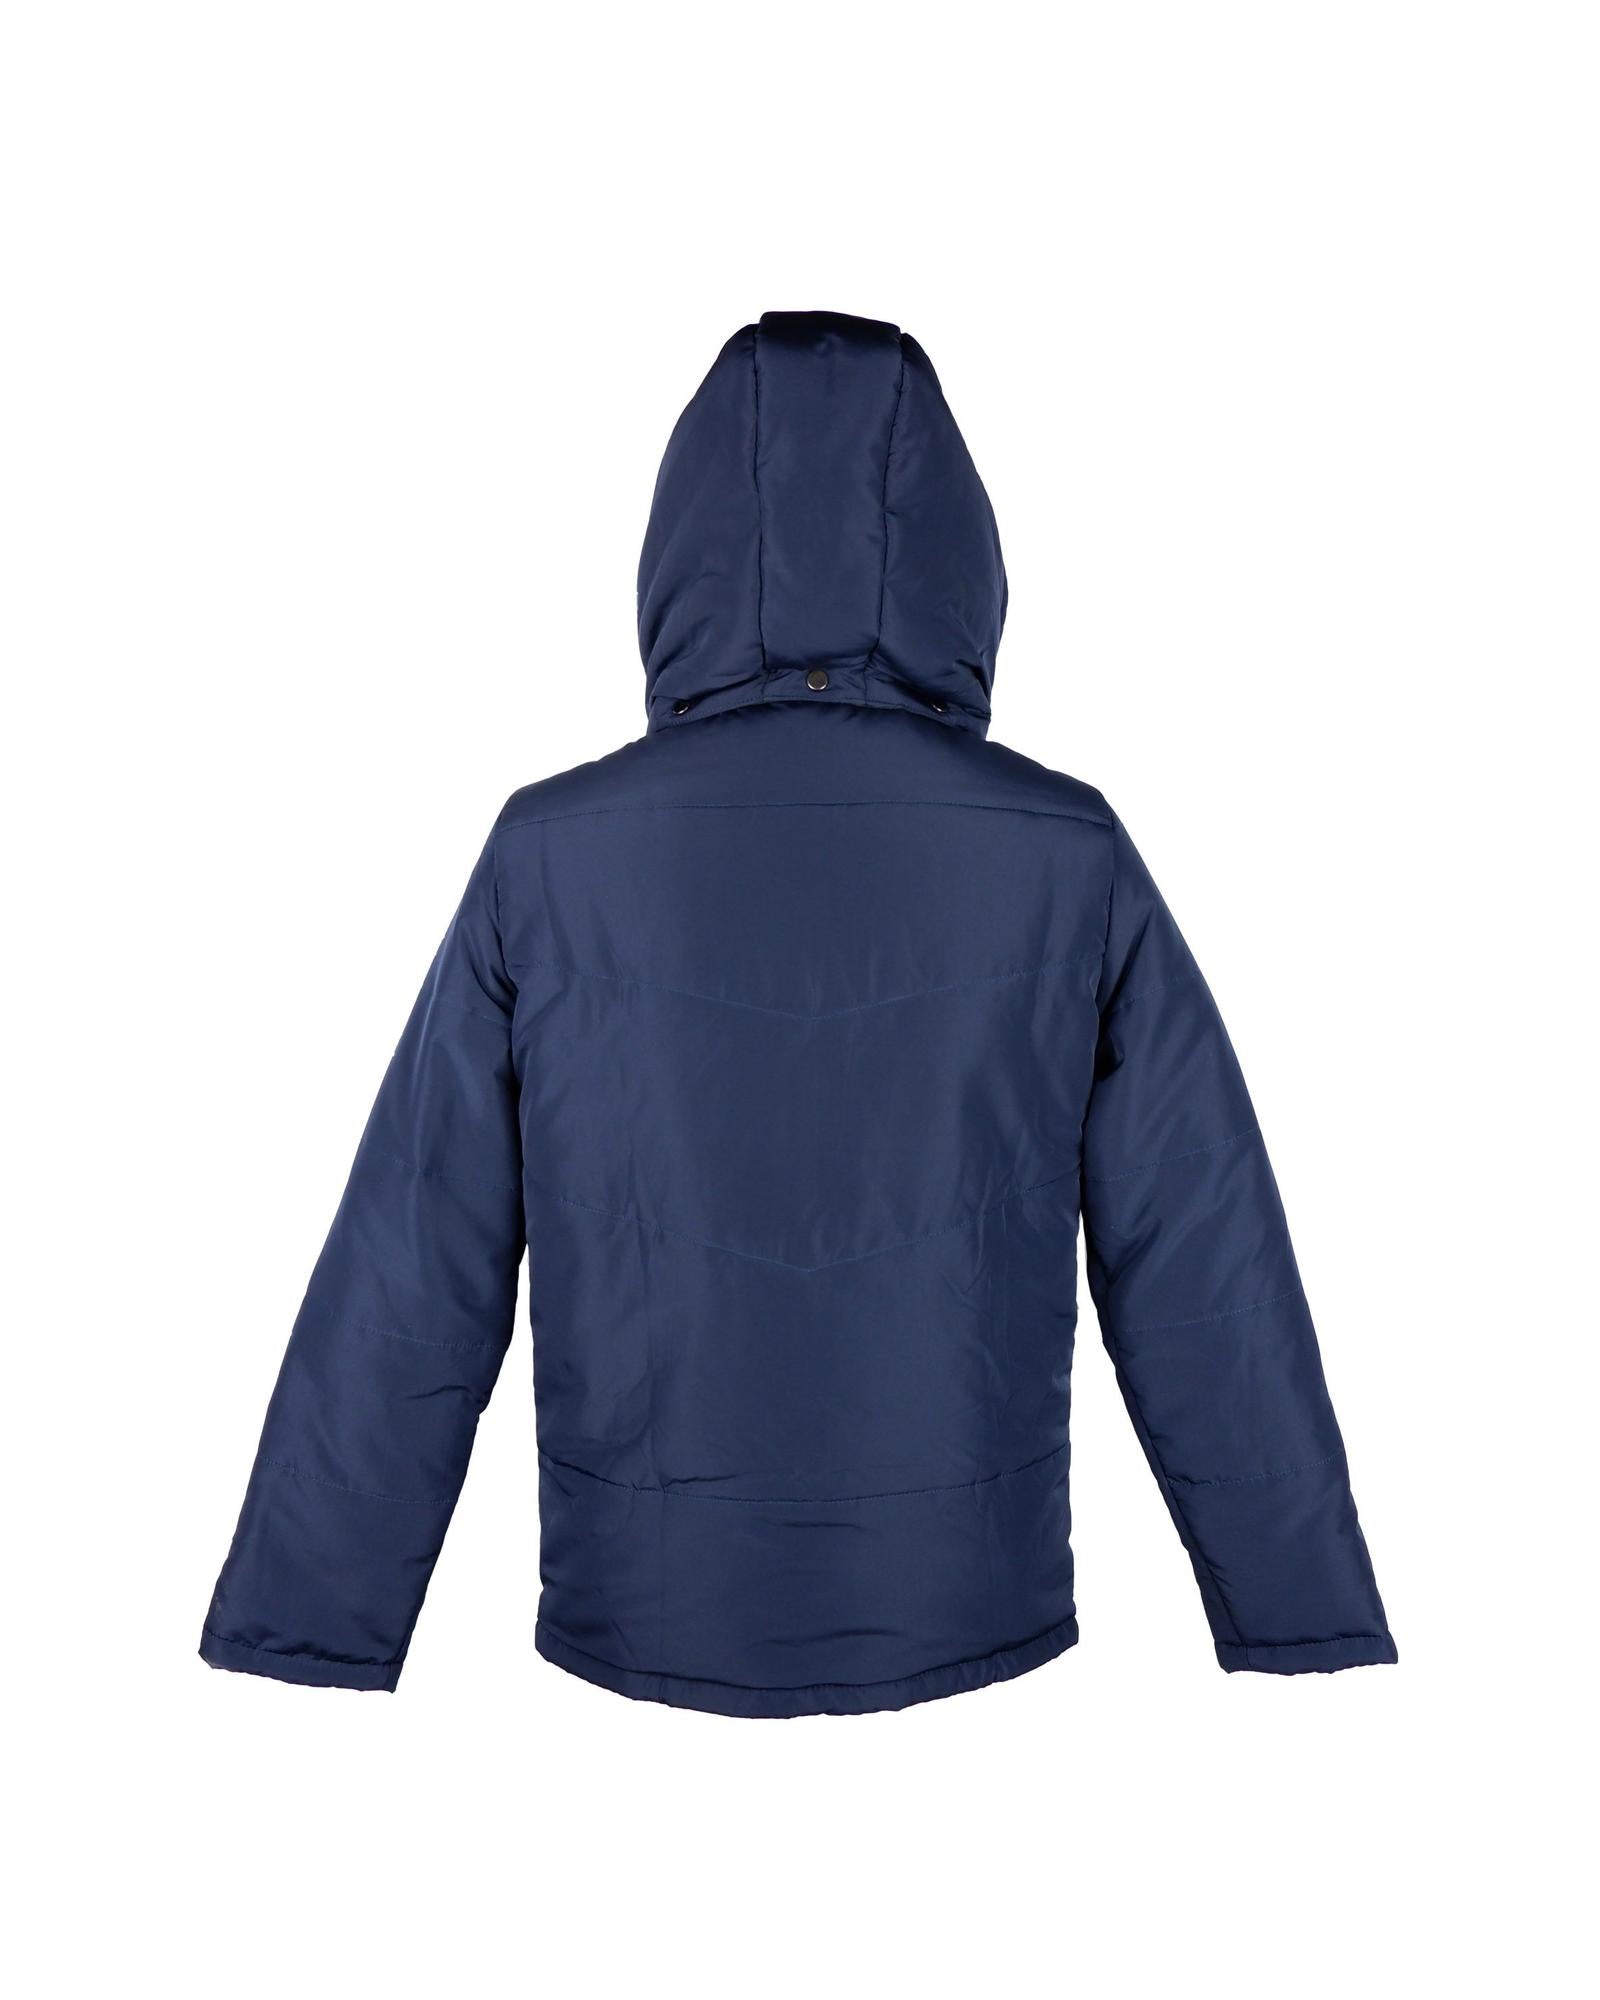 Blue Aquascutum Jacket with Removable Hood and Tartan Pattern Inside 54 IT Men